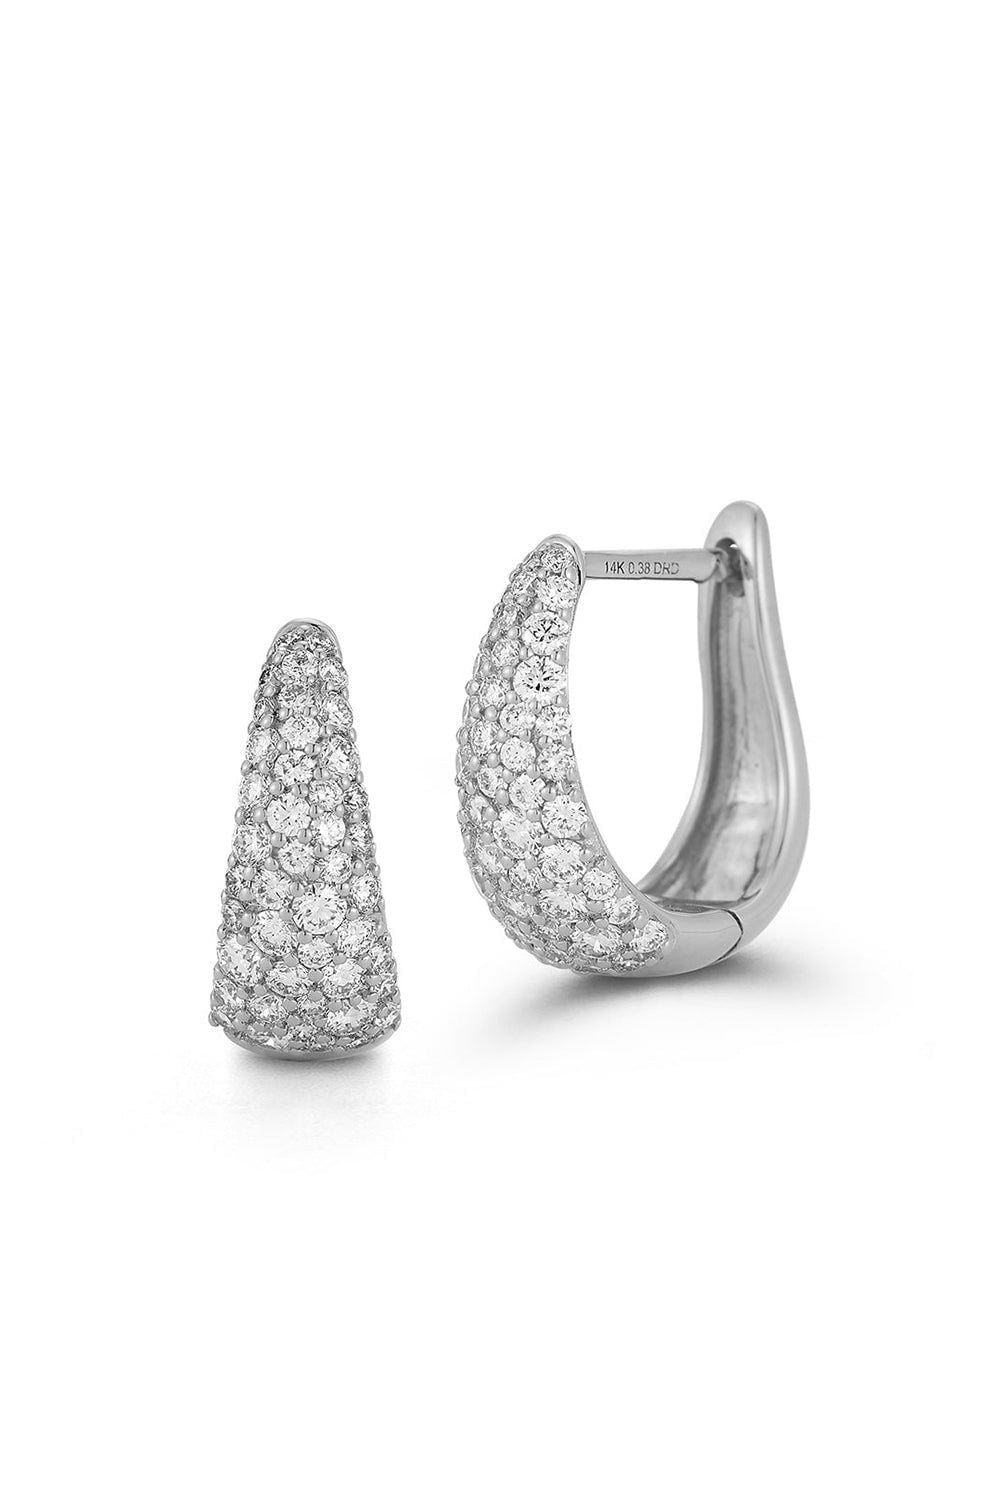 Dana Rebecca Designs Ava Bea 14kt Rose Gold Diamond Huggie Earrings - Pink